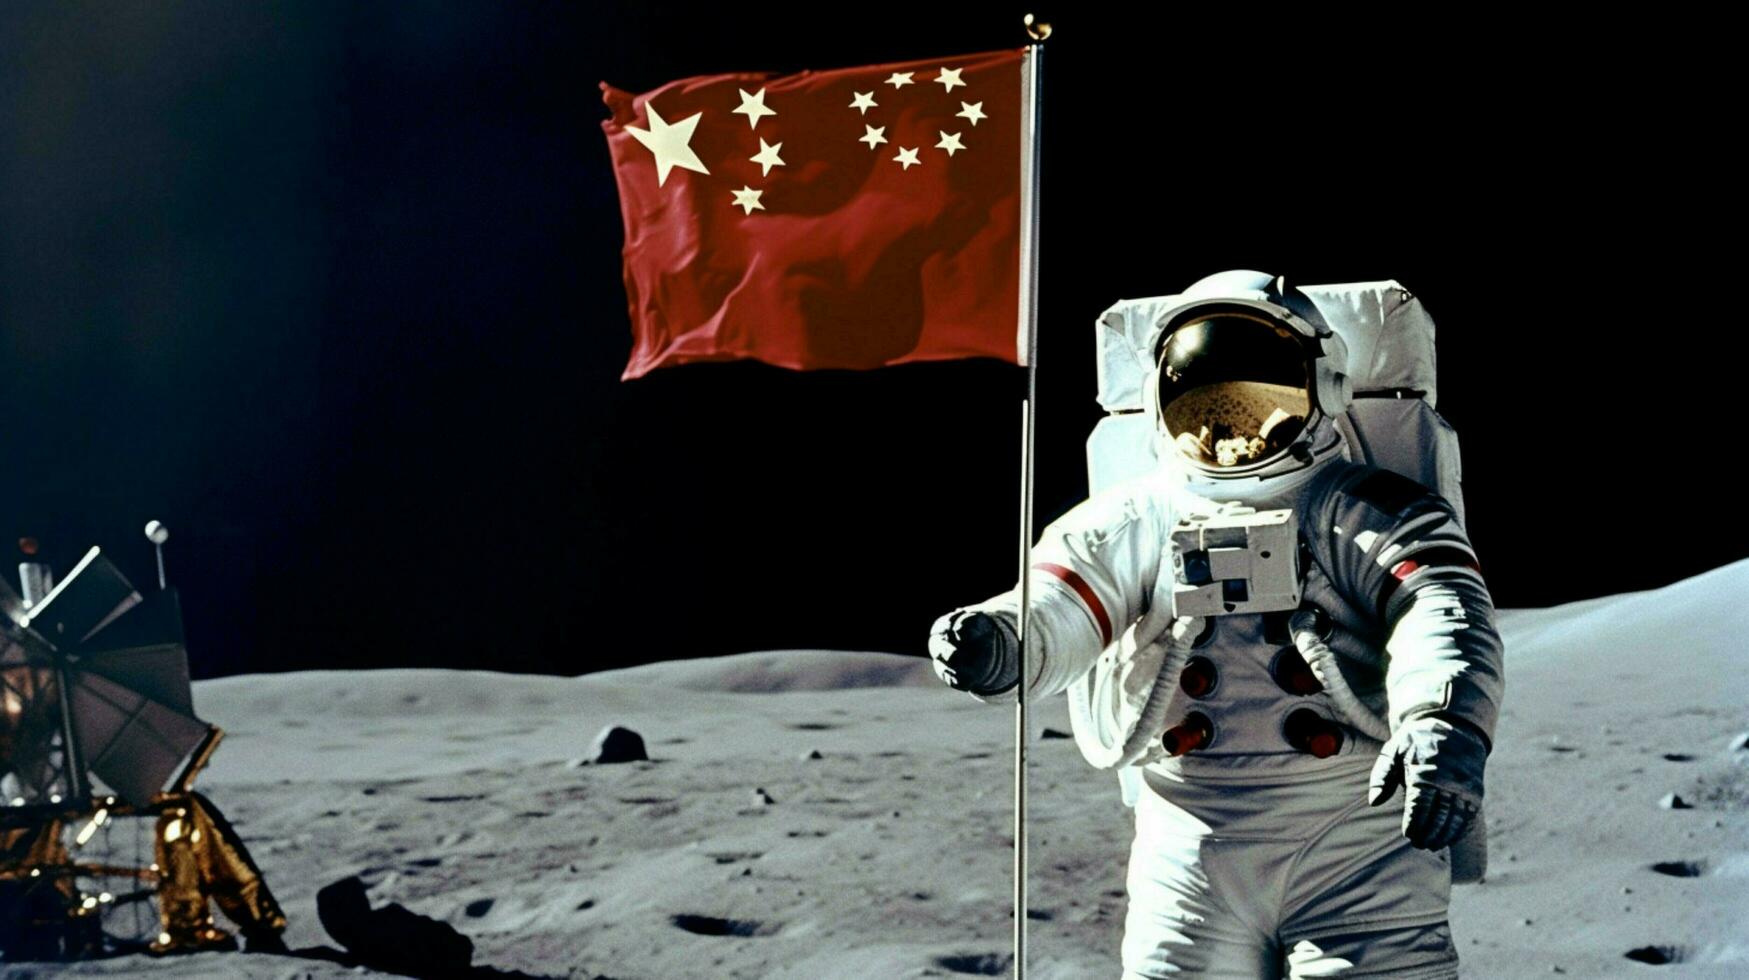 kinesisk astronaut måne med flagga foto